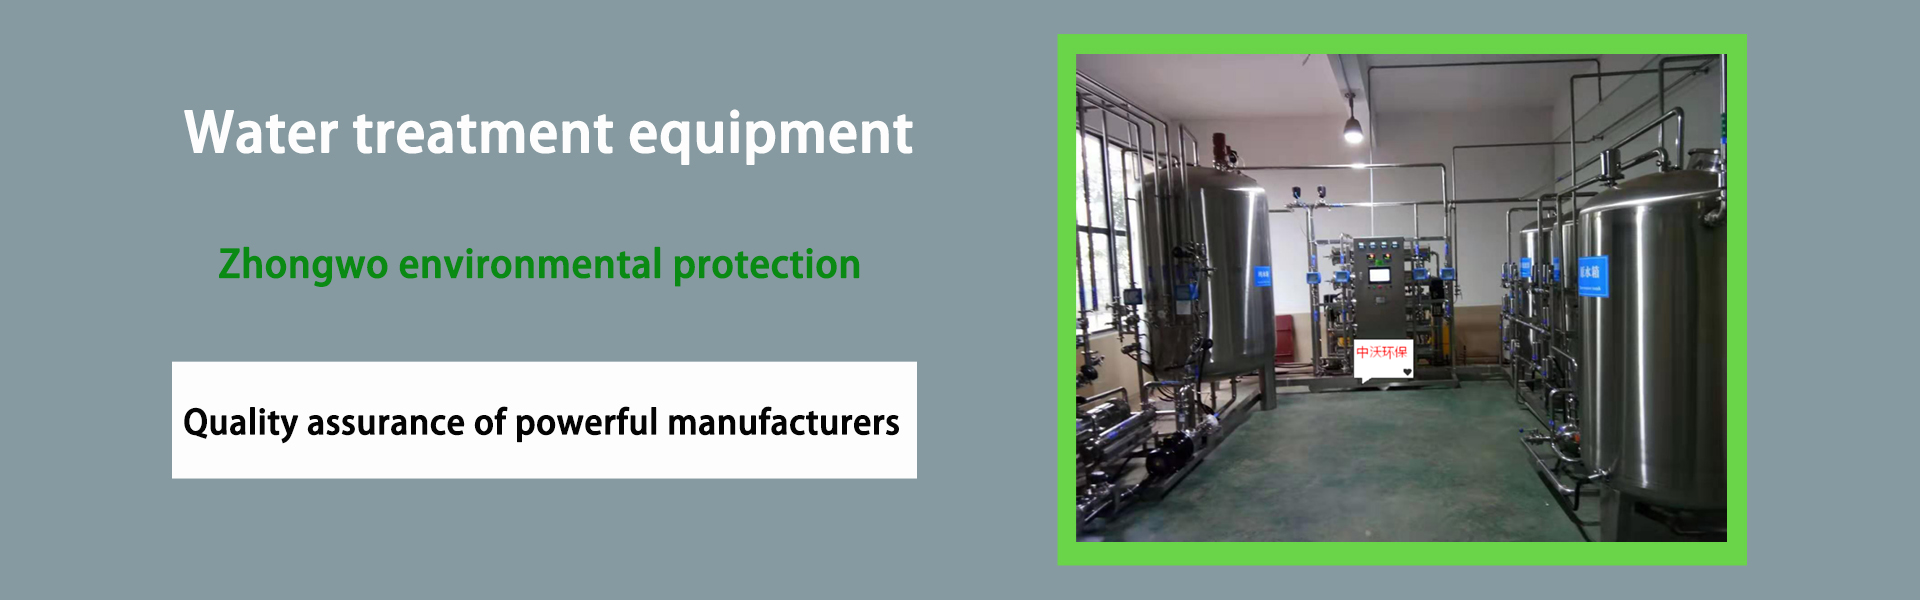 vattenreningsutrustning, vattenreningsutrustning, miljöskyddsutrustning,Foshan zhongwo Environmental Protection Technology Co Ltd.